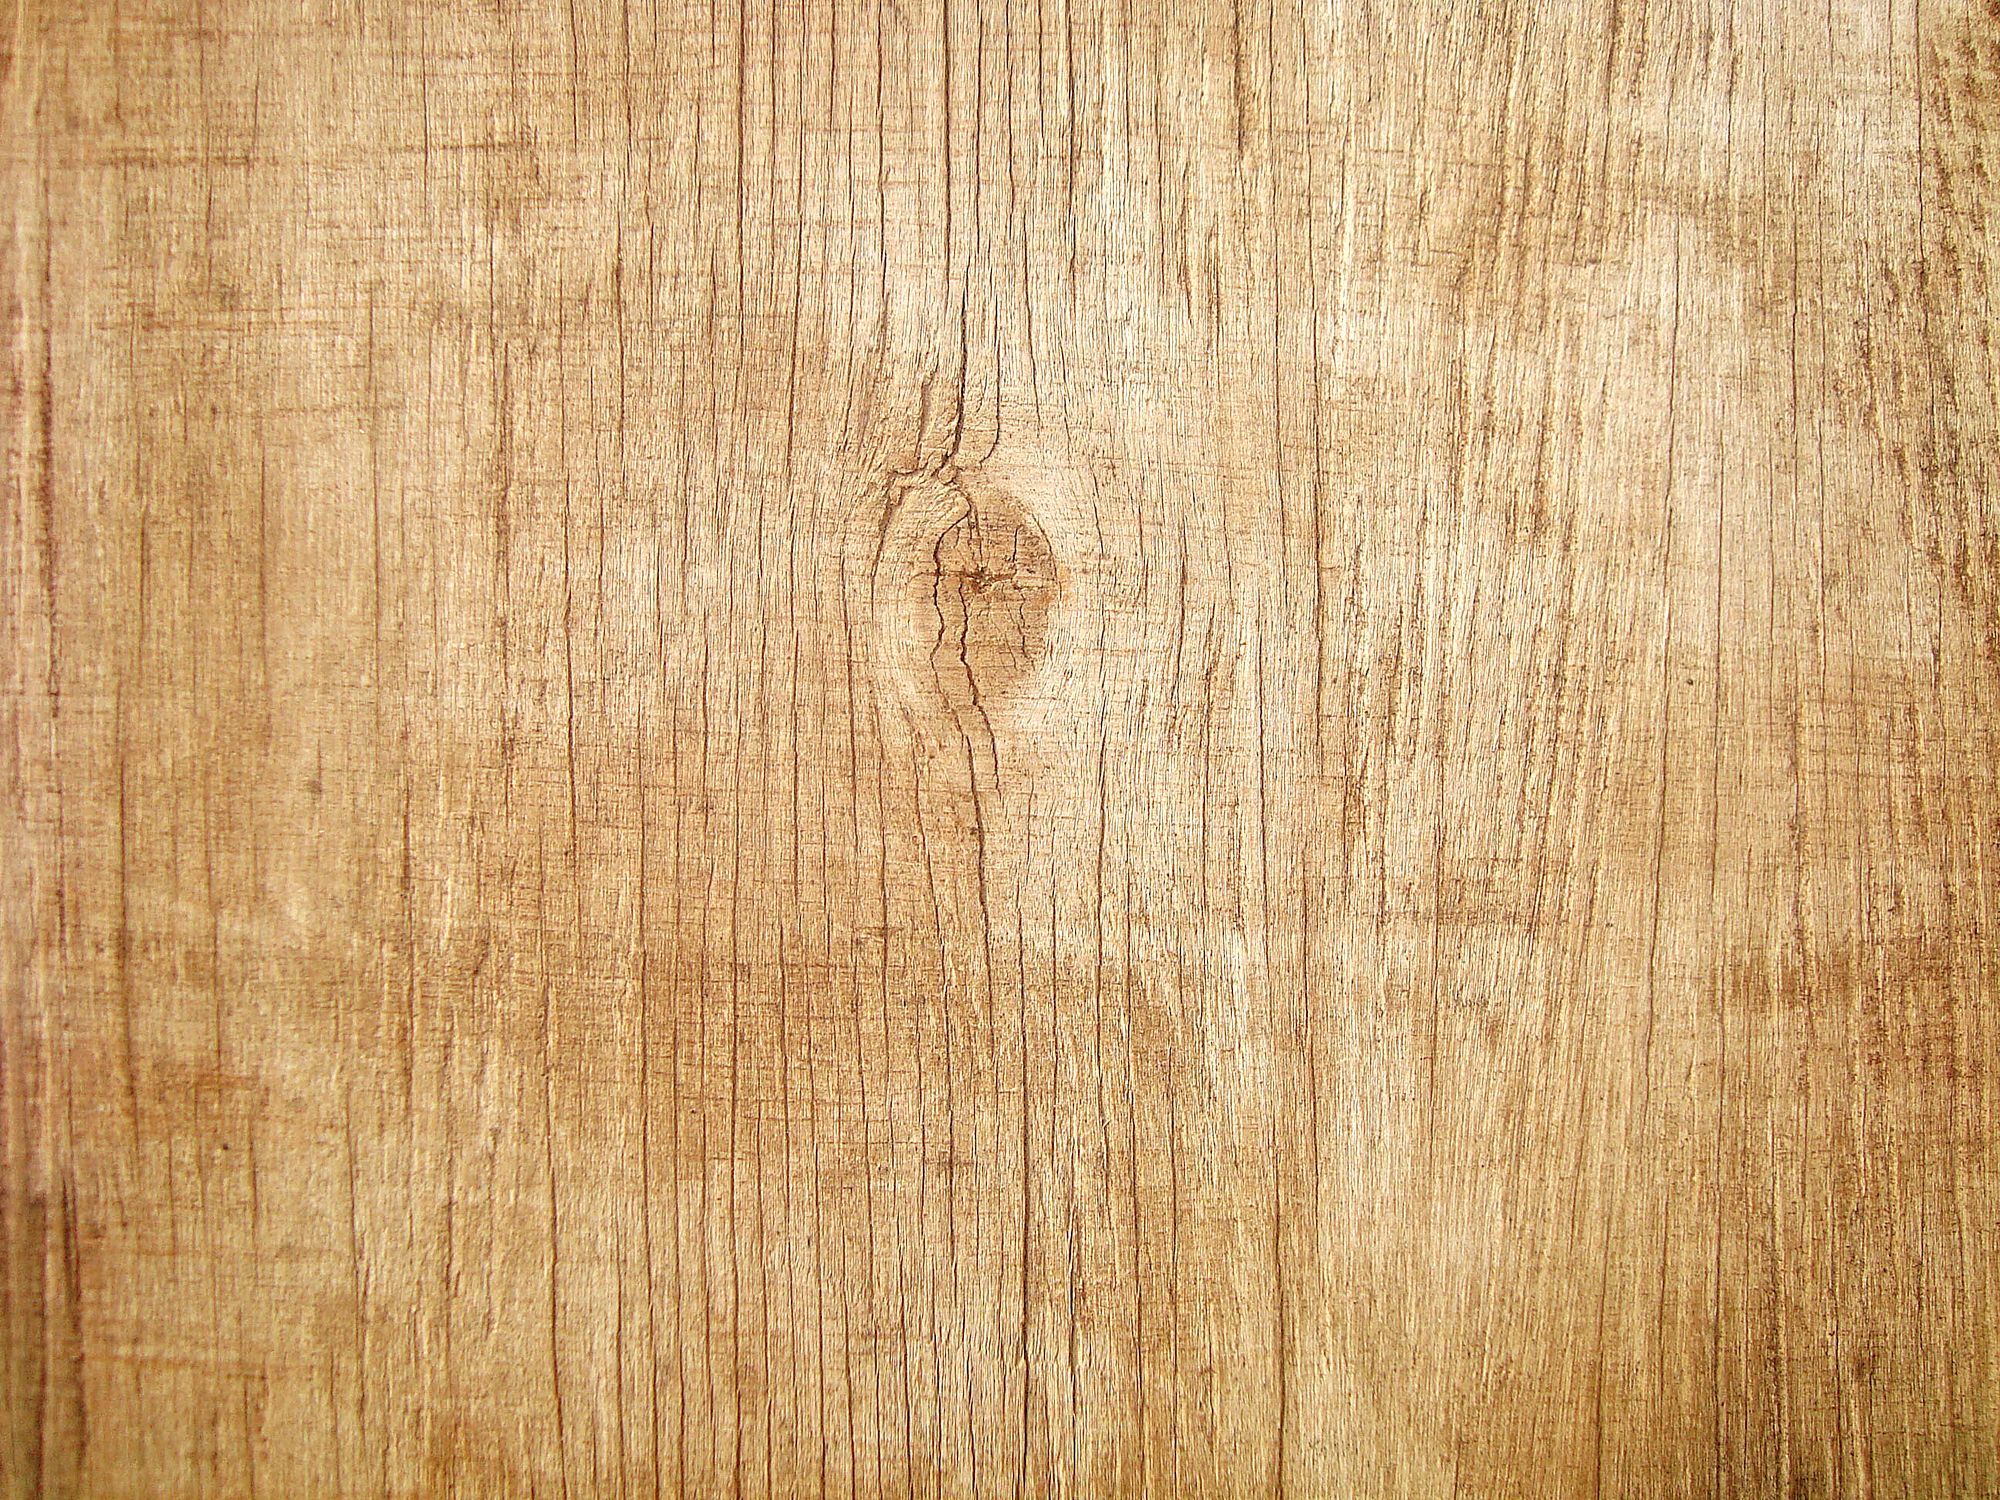 wood texture 34 | Patterns and Texture | Pinterest | Texture design ...